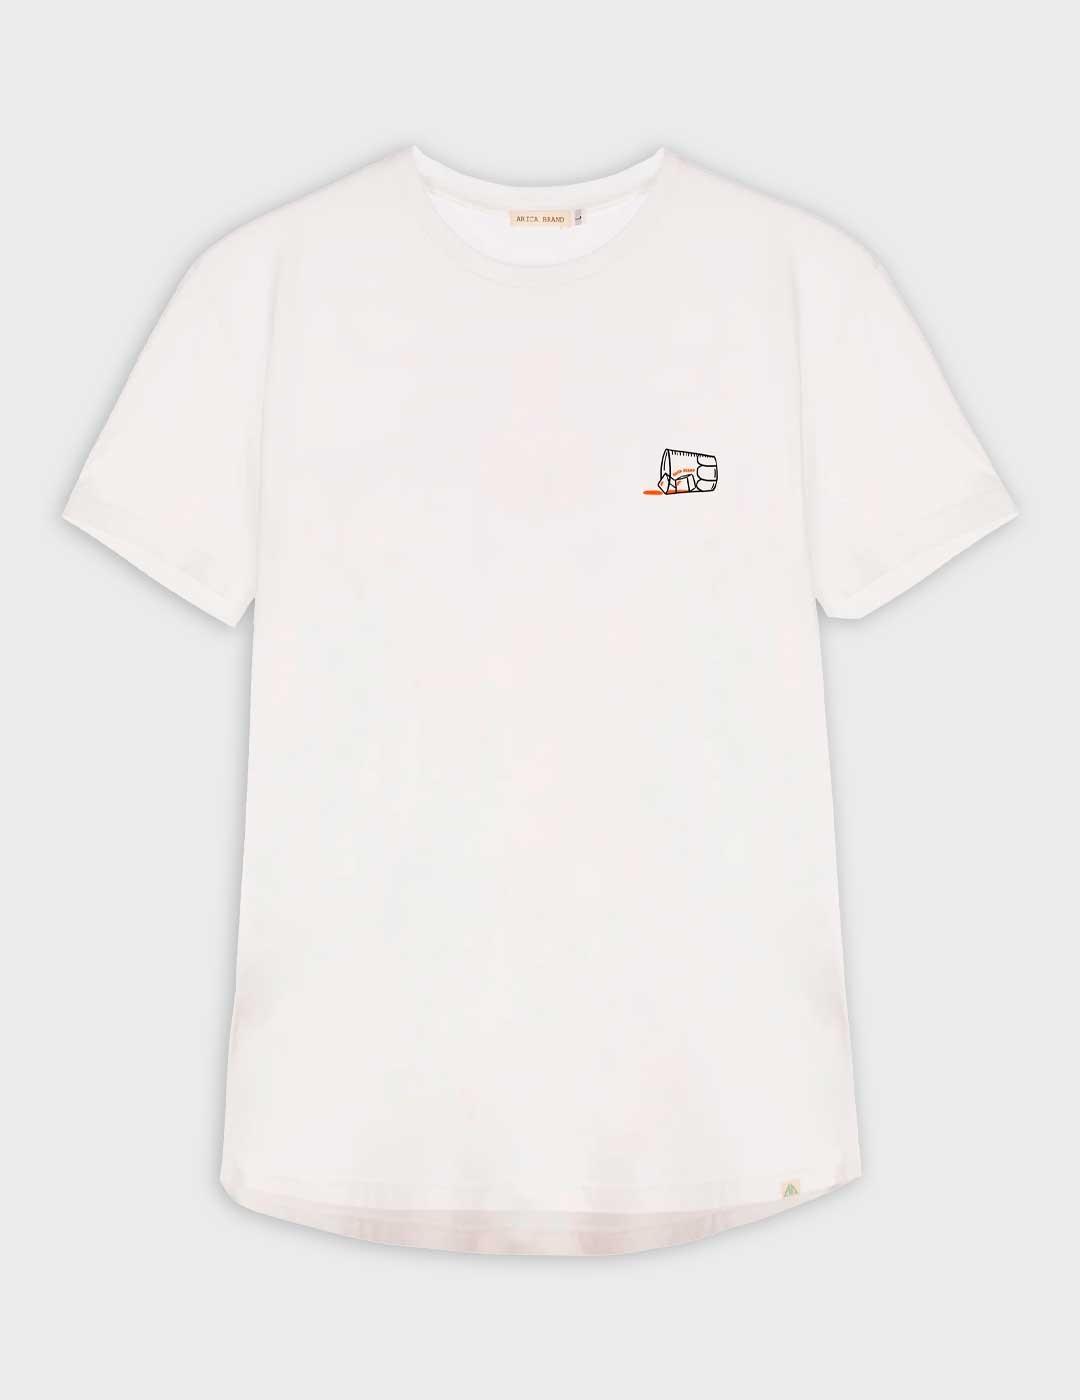 Camiseta Arica Brand Spritz blanca para hombre